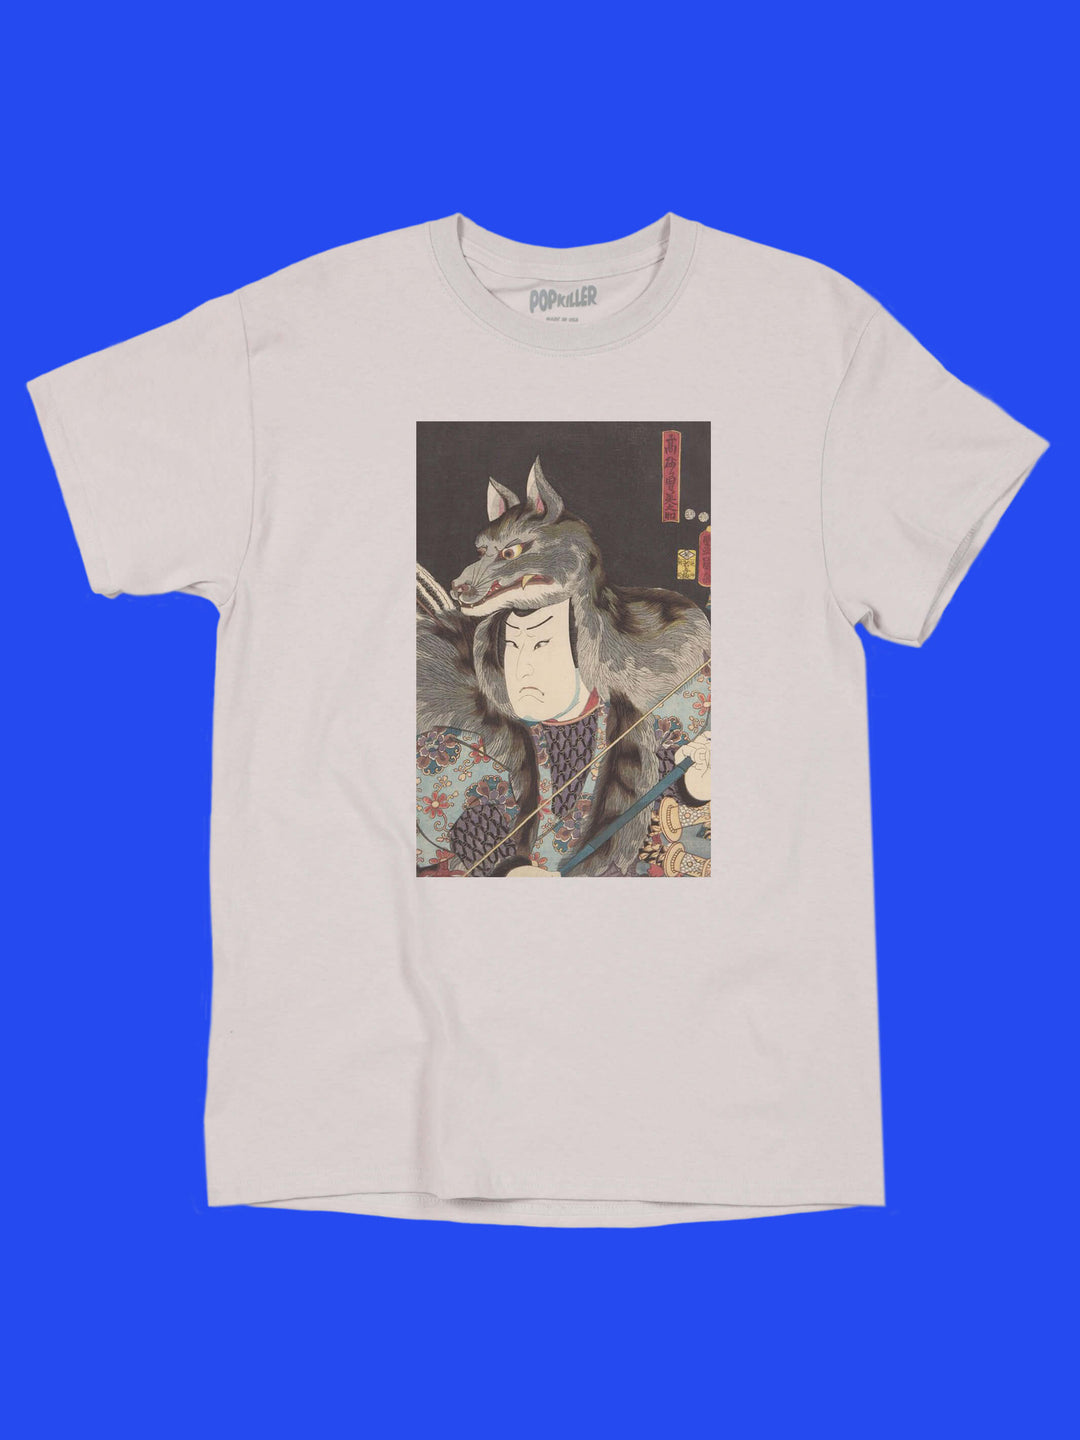 A grey t-shirt with a samurai wearing a wolf pelt on it.